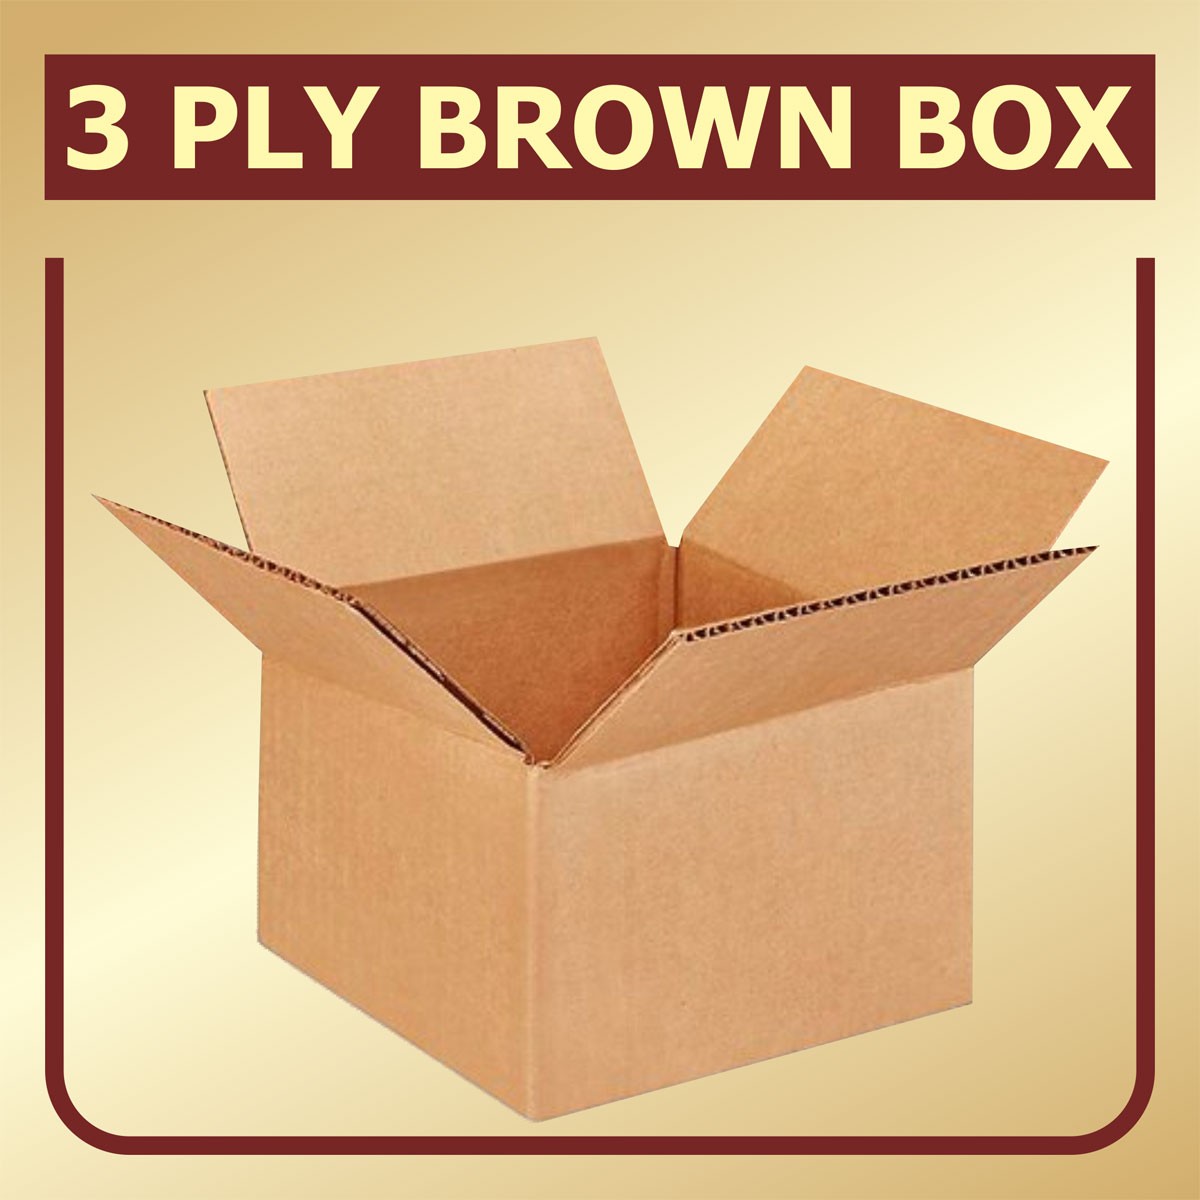 3 Ply Brown Box